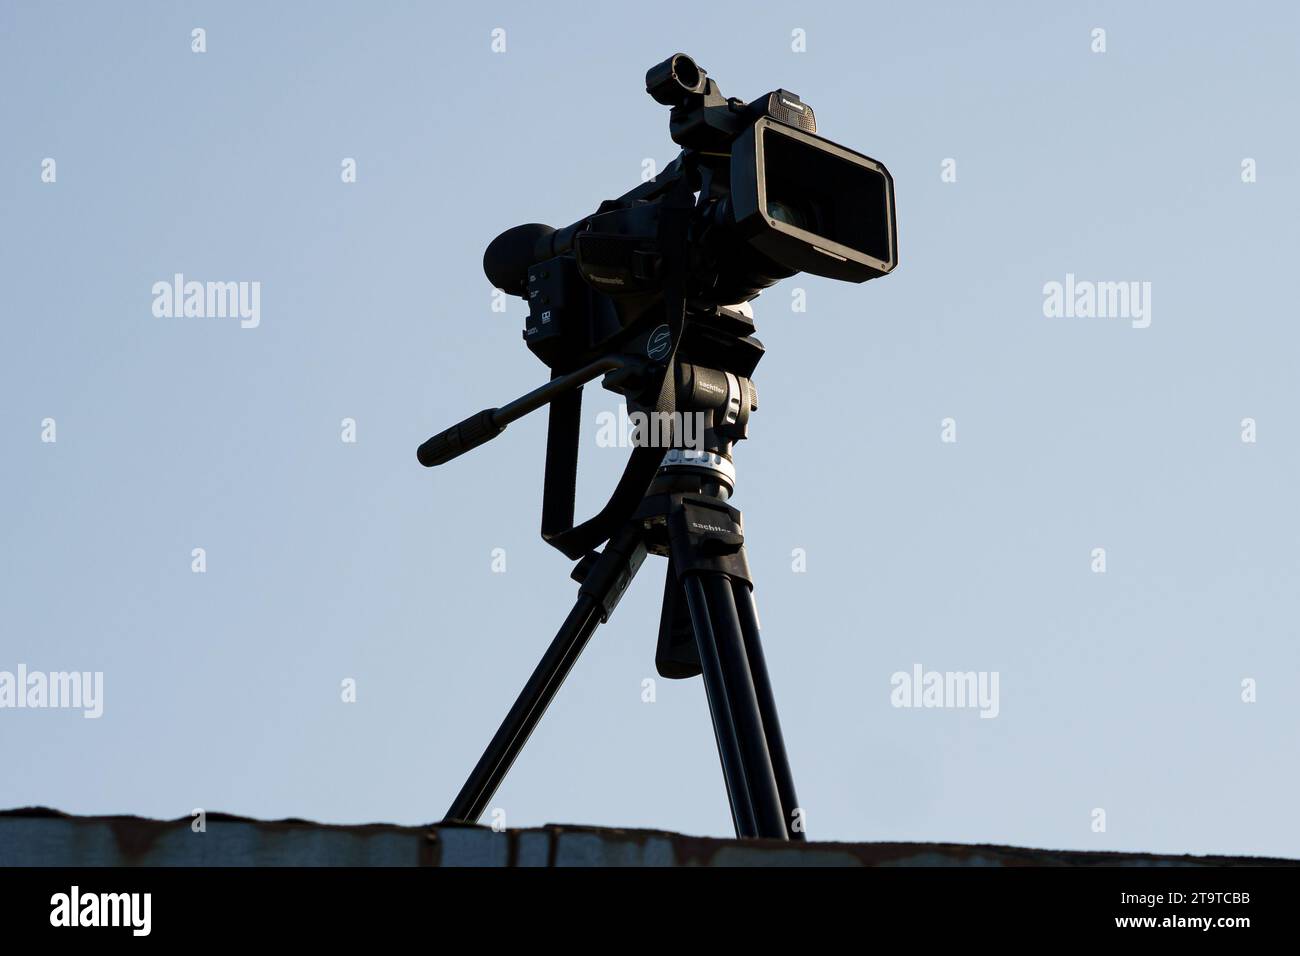 Professional Panasonic camera on a tripod, filming an airshow Stock Photo